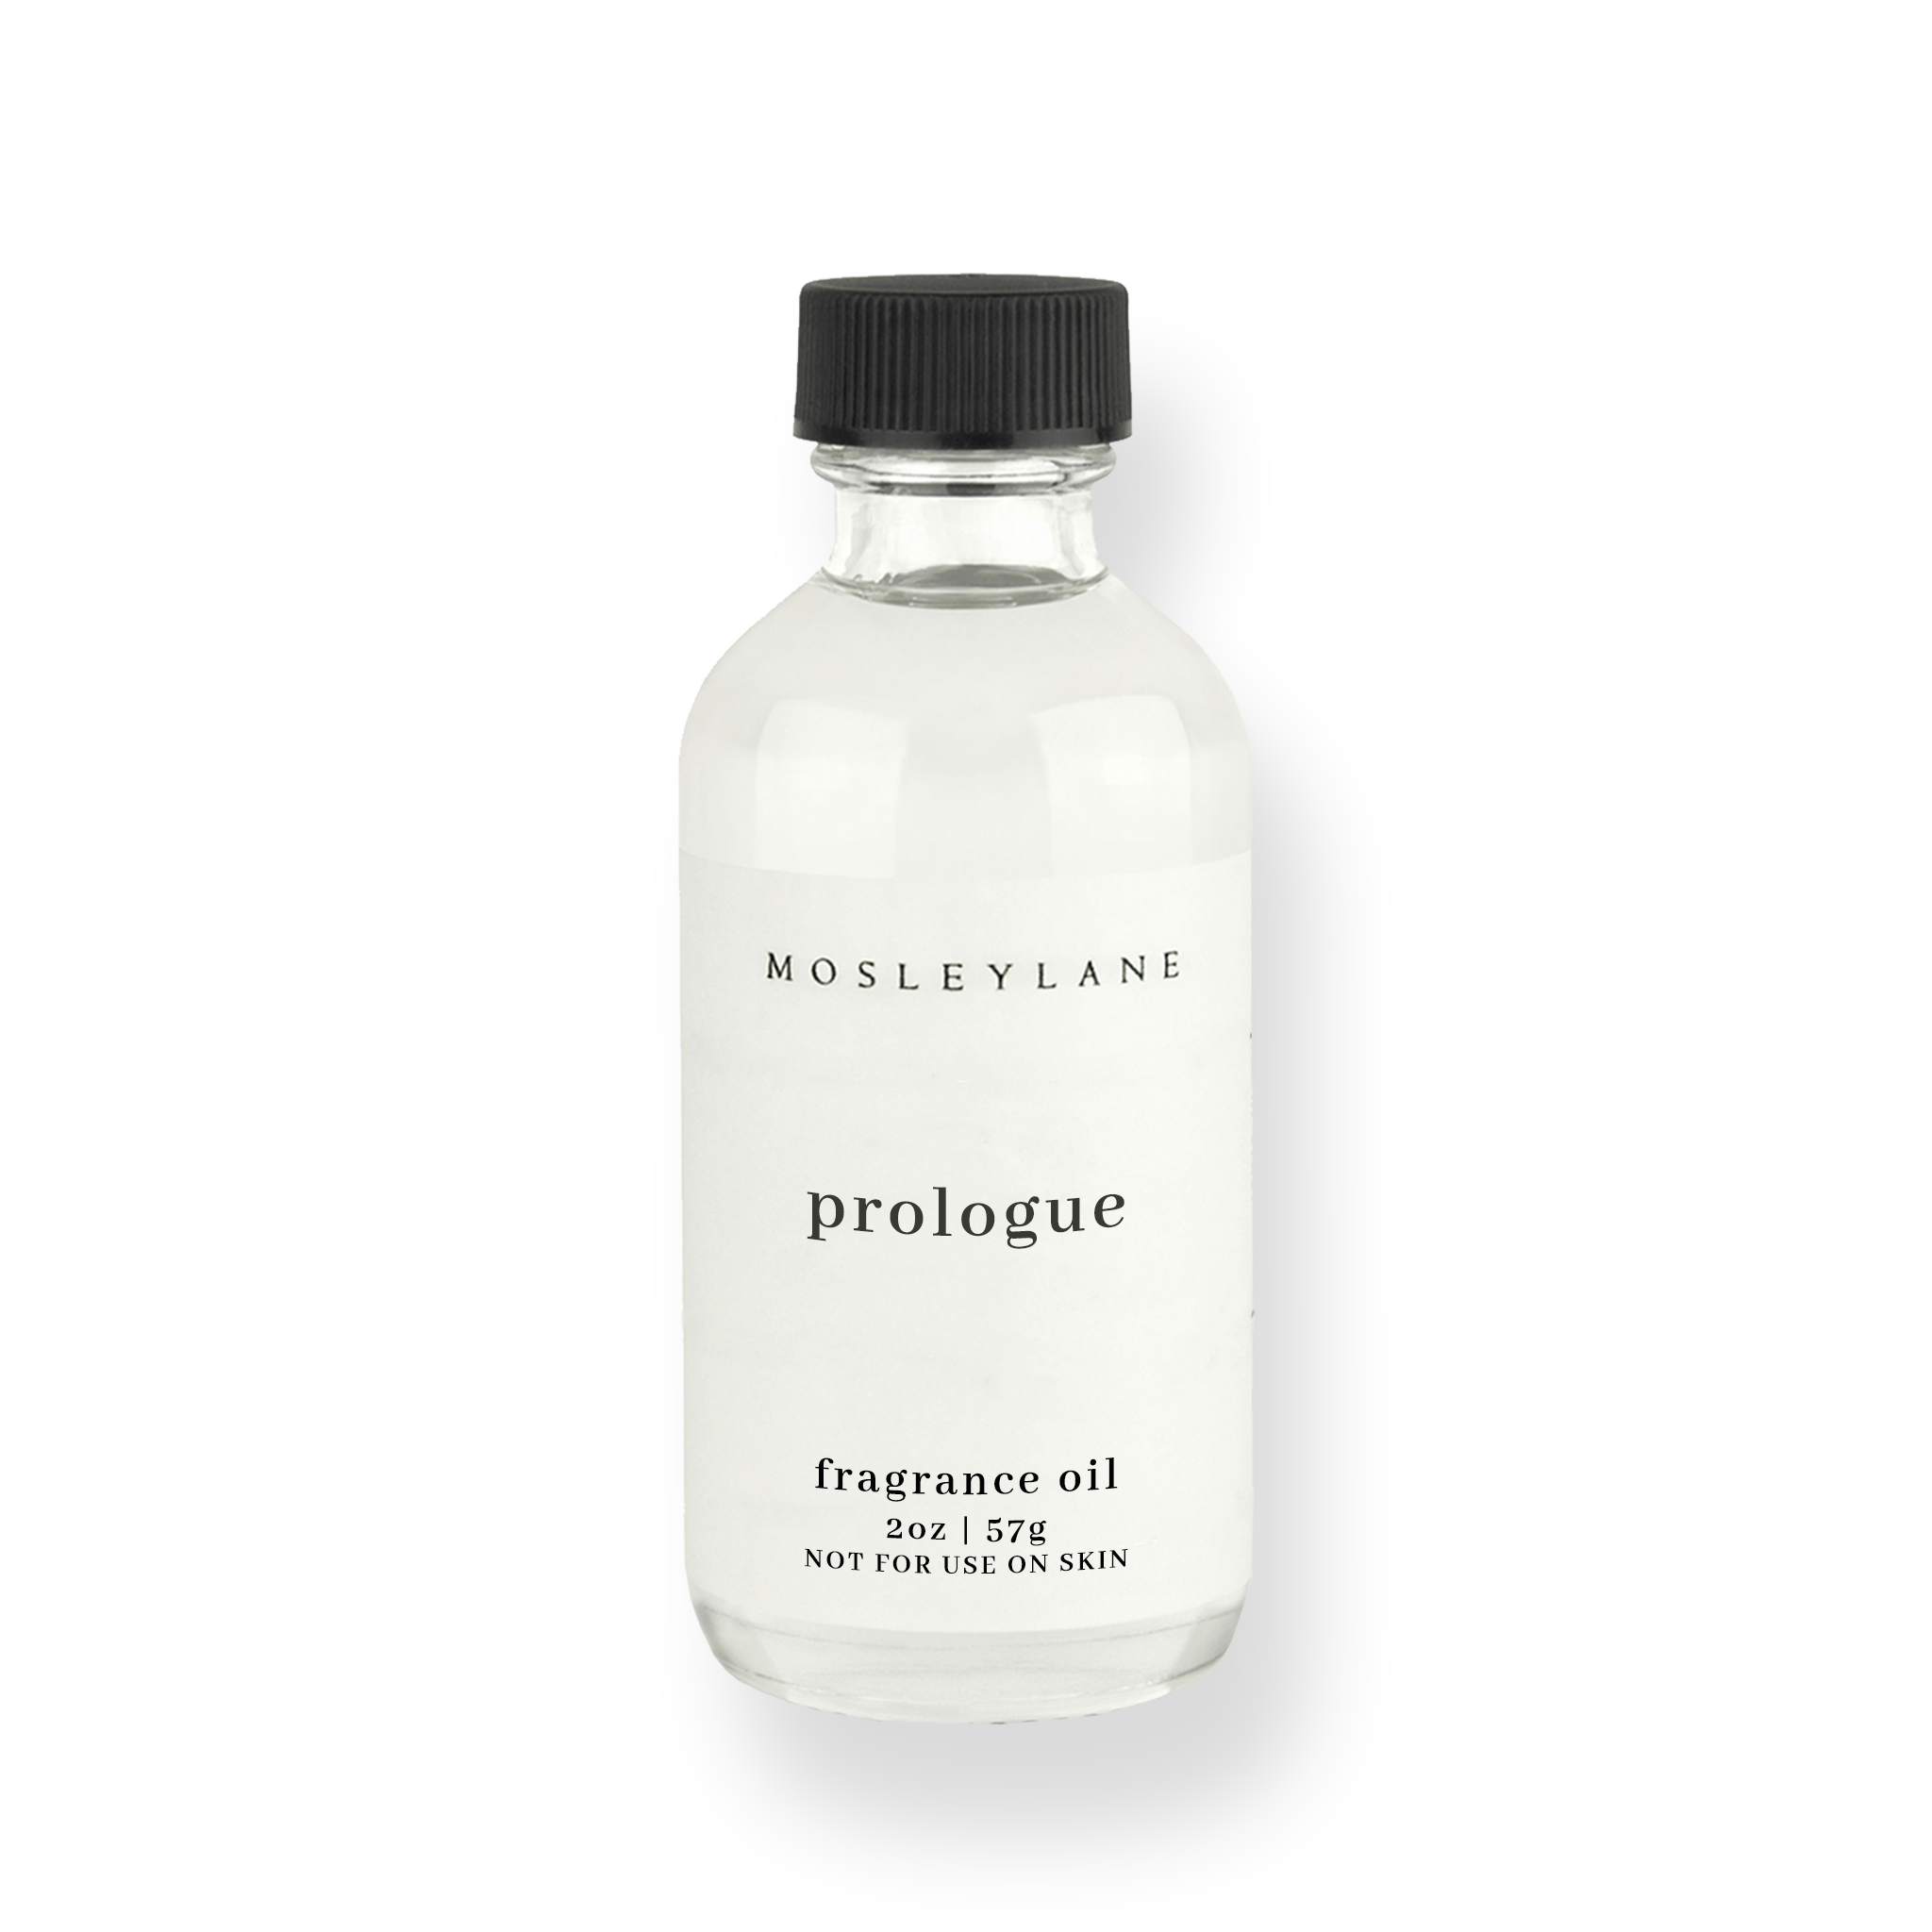 Prologue · Fragrance Oil